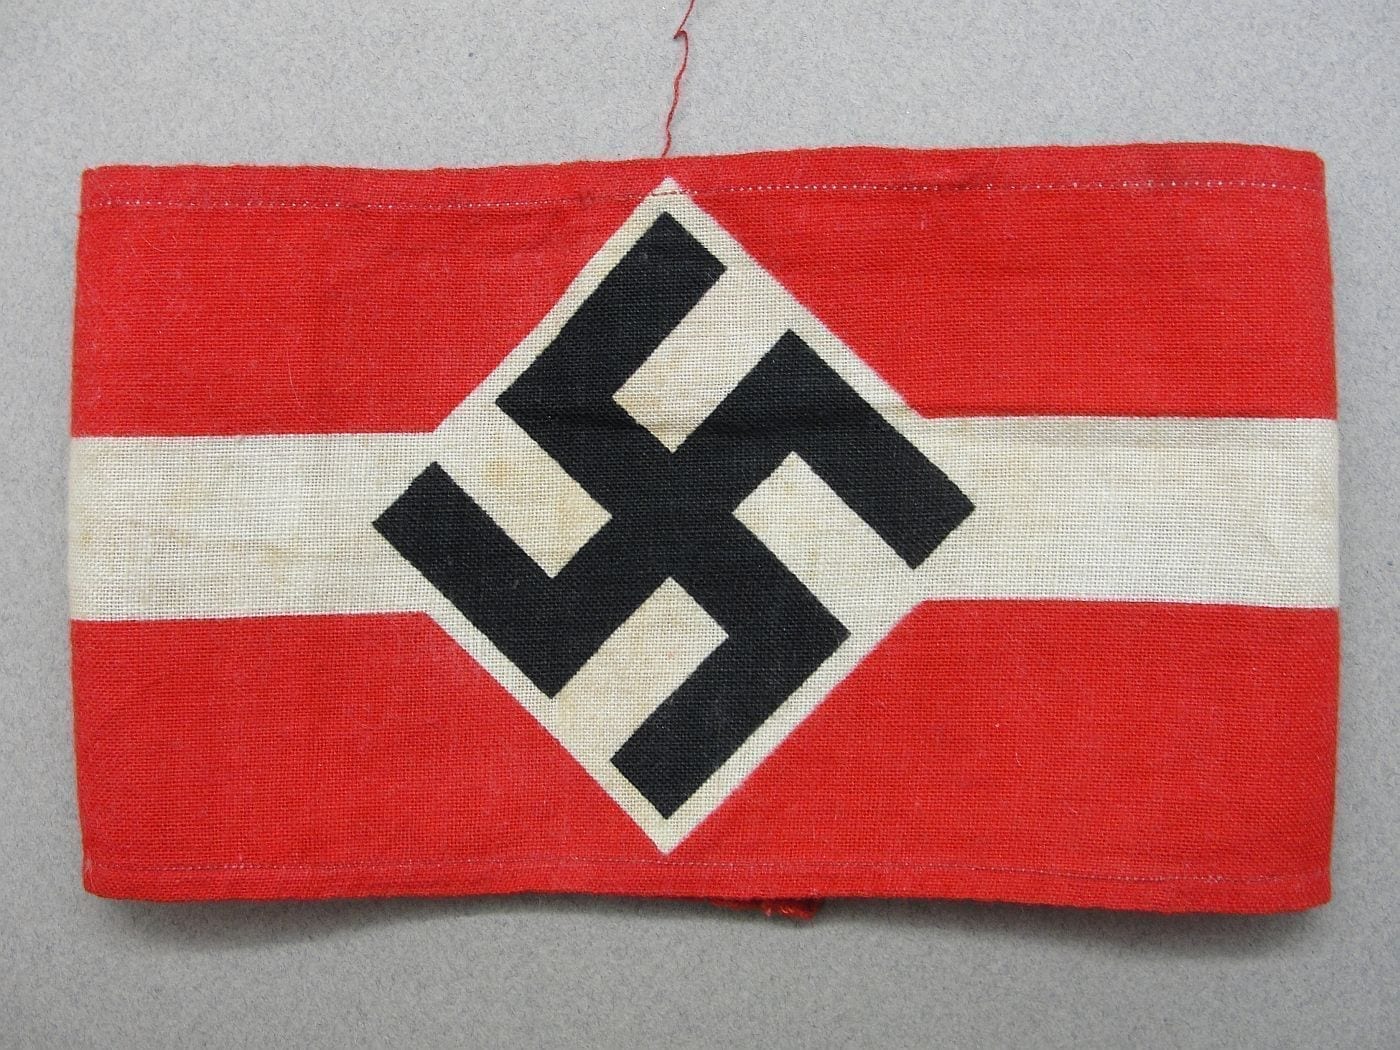 Hitler Youth Armband Rare Printed Version